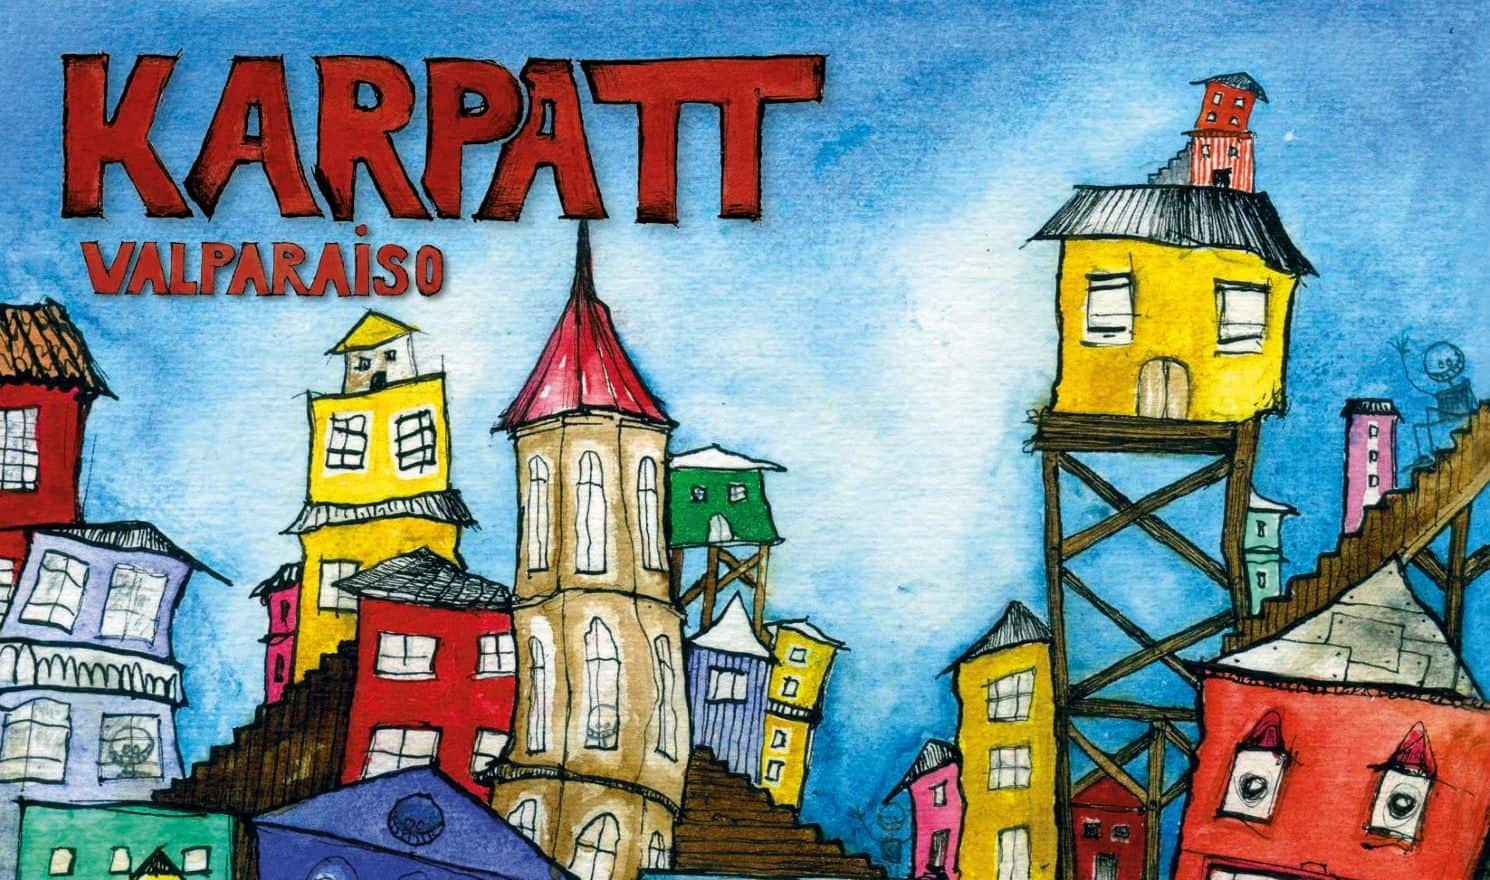 nouvel album karpatt valparaiso 2019